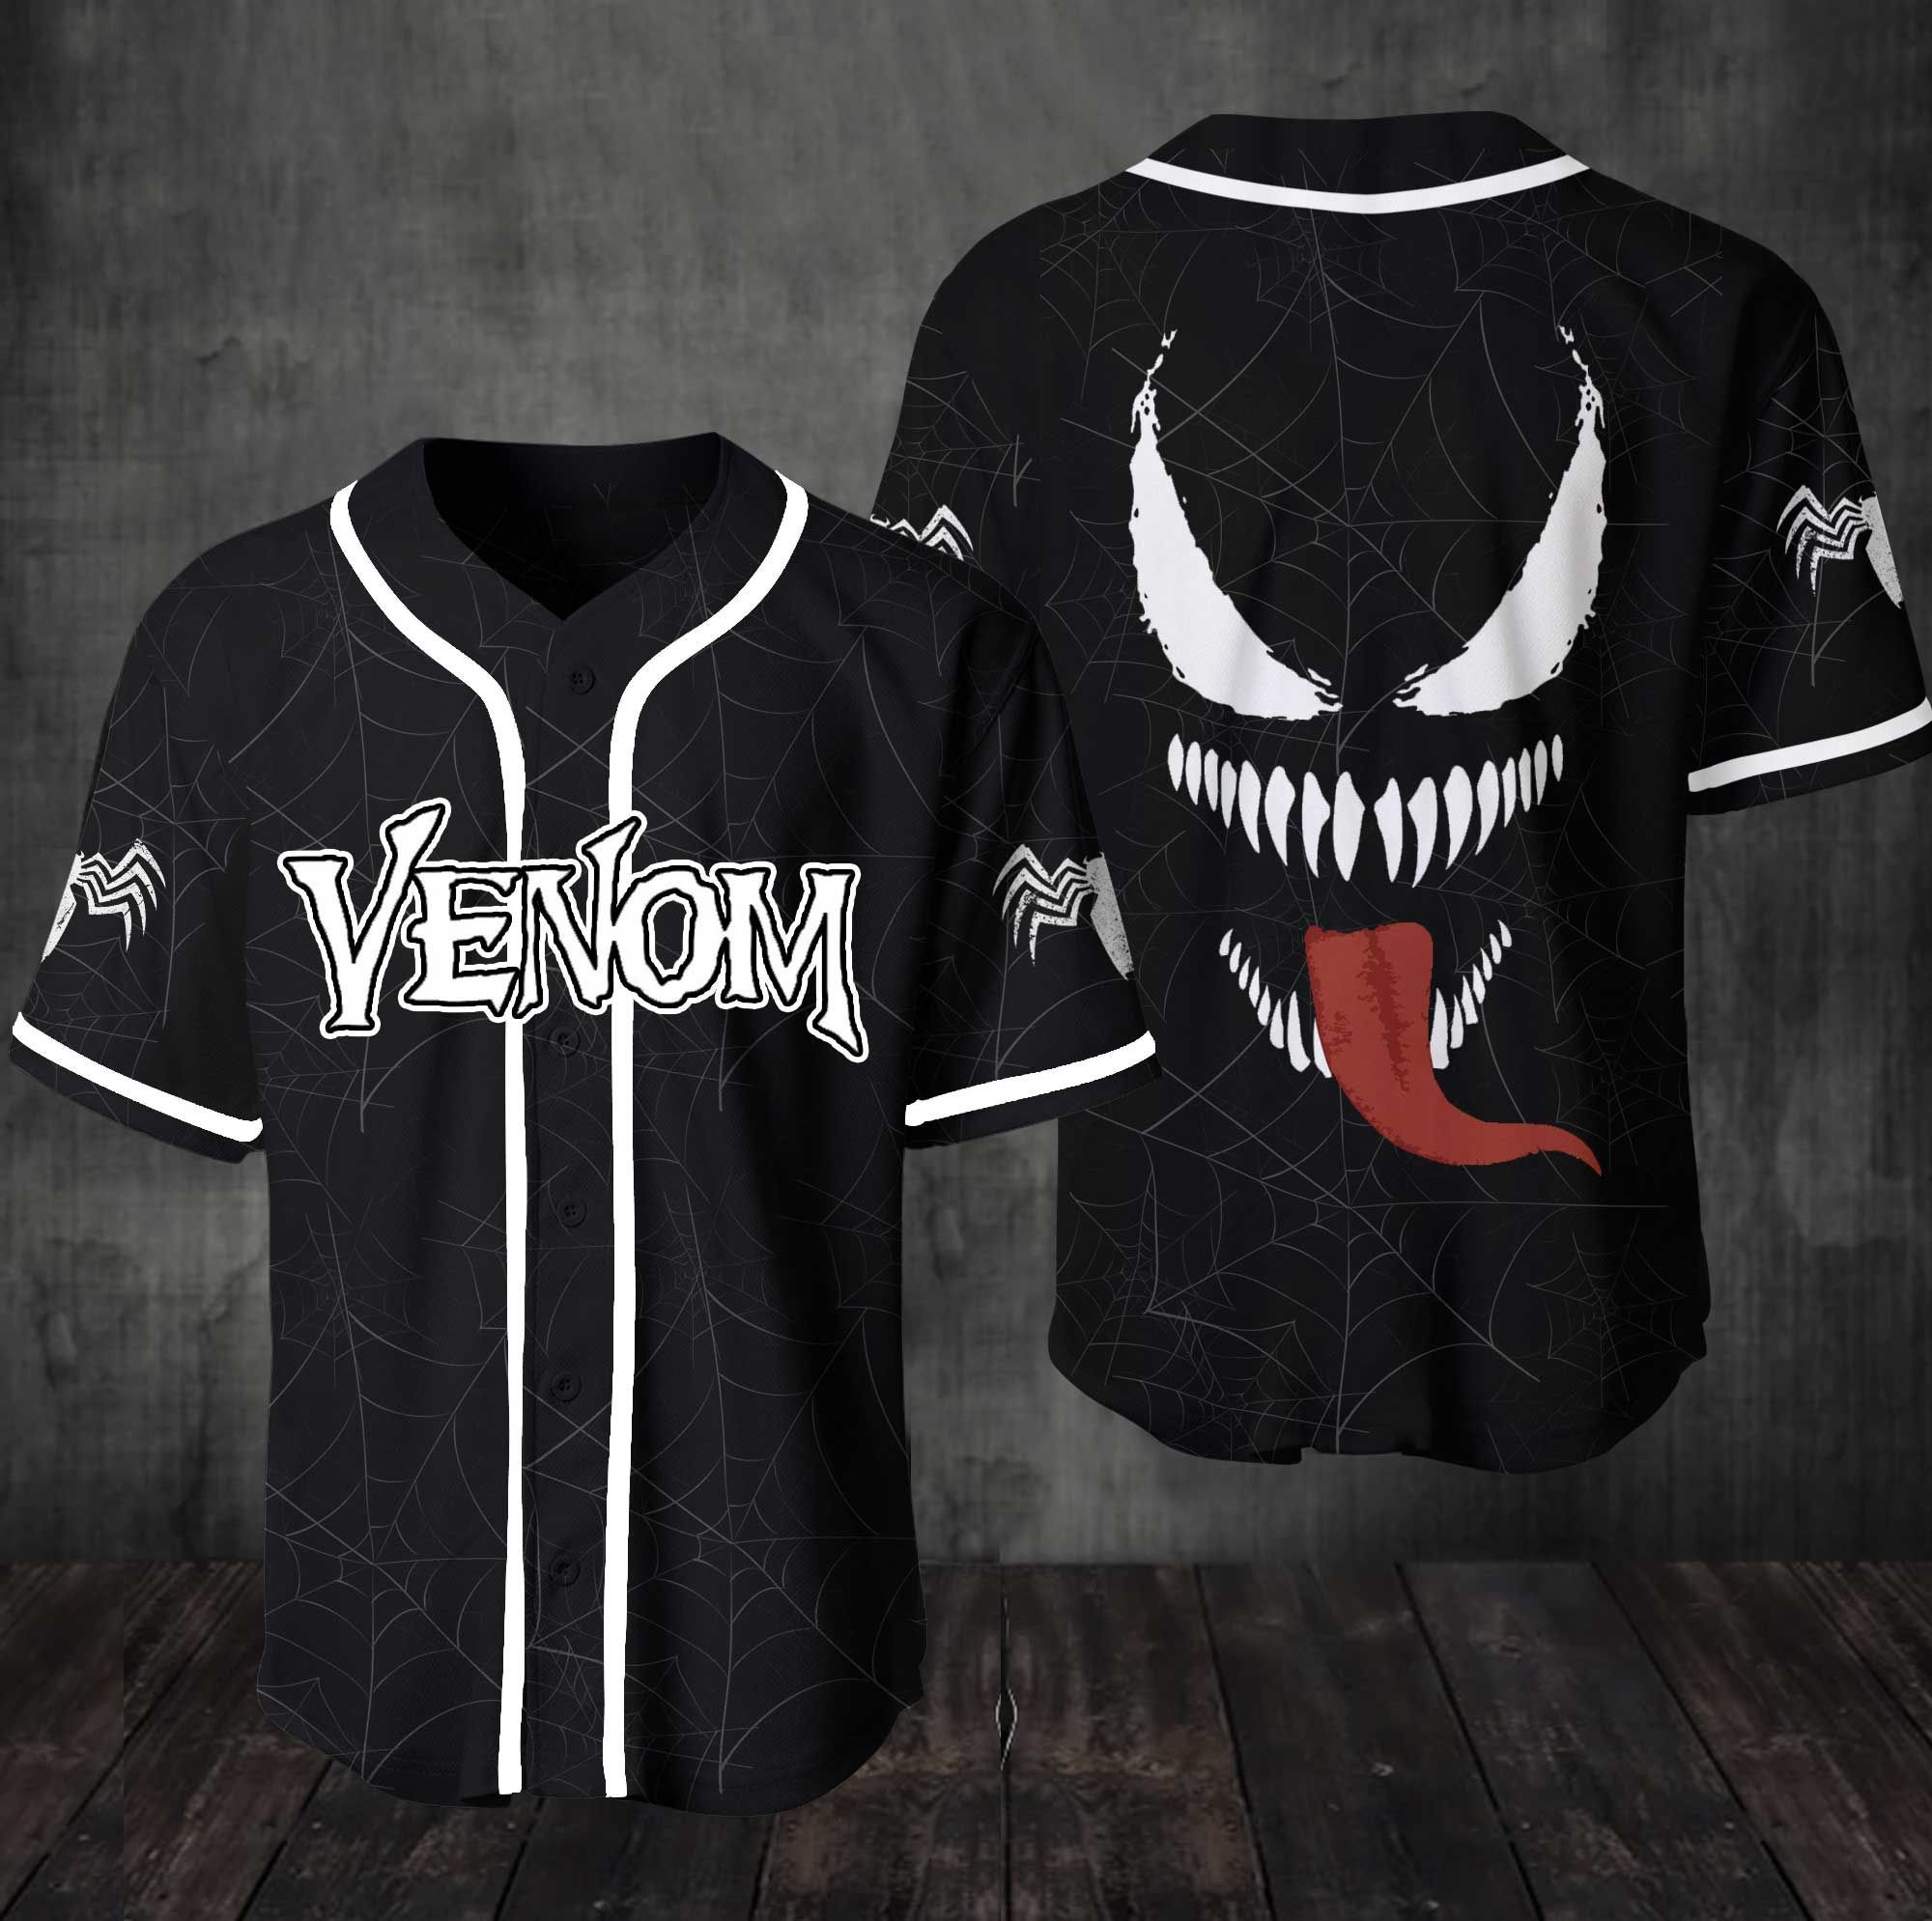 Venom baseball jersey shirt – Saleoff 190821